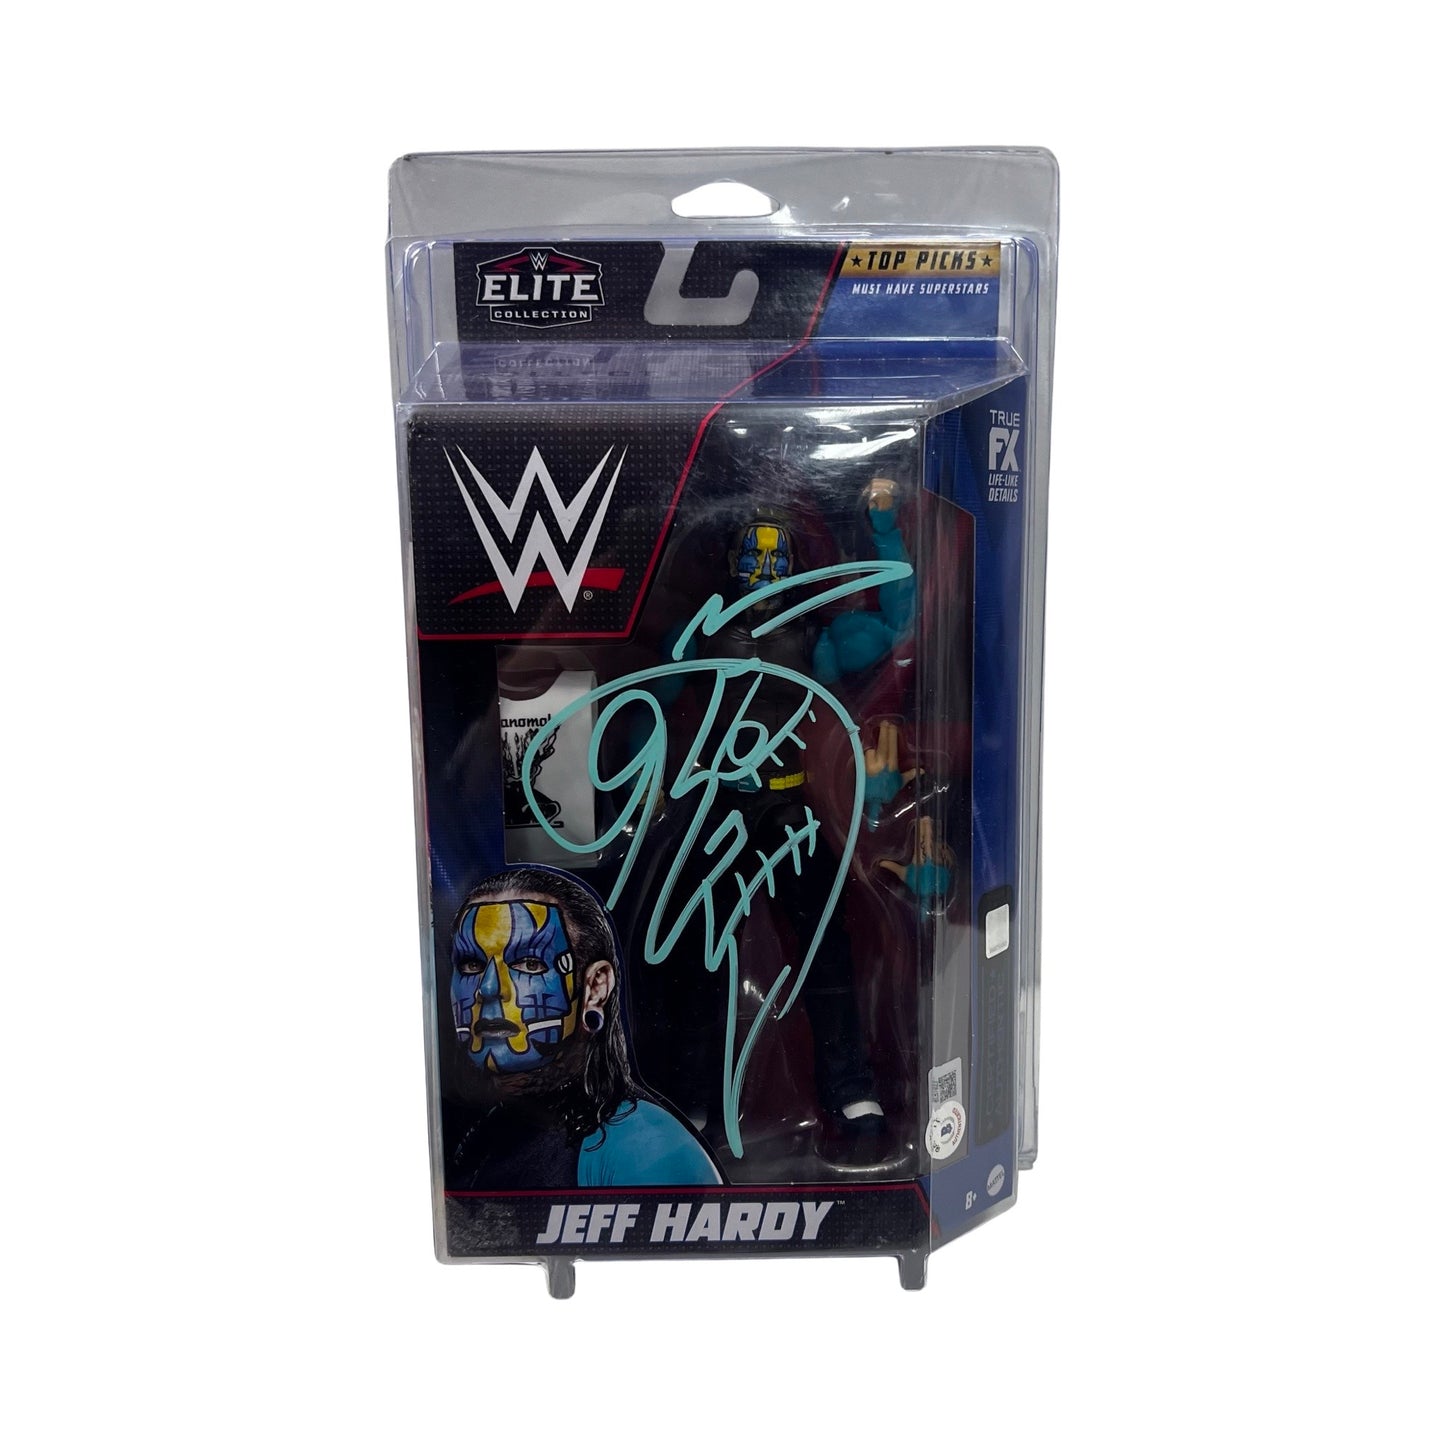 Jeff Hardy Autographed WWE Action Figure Beckett